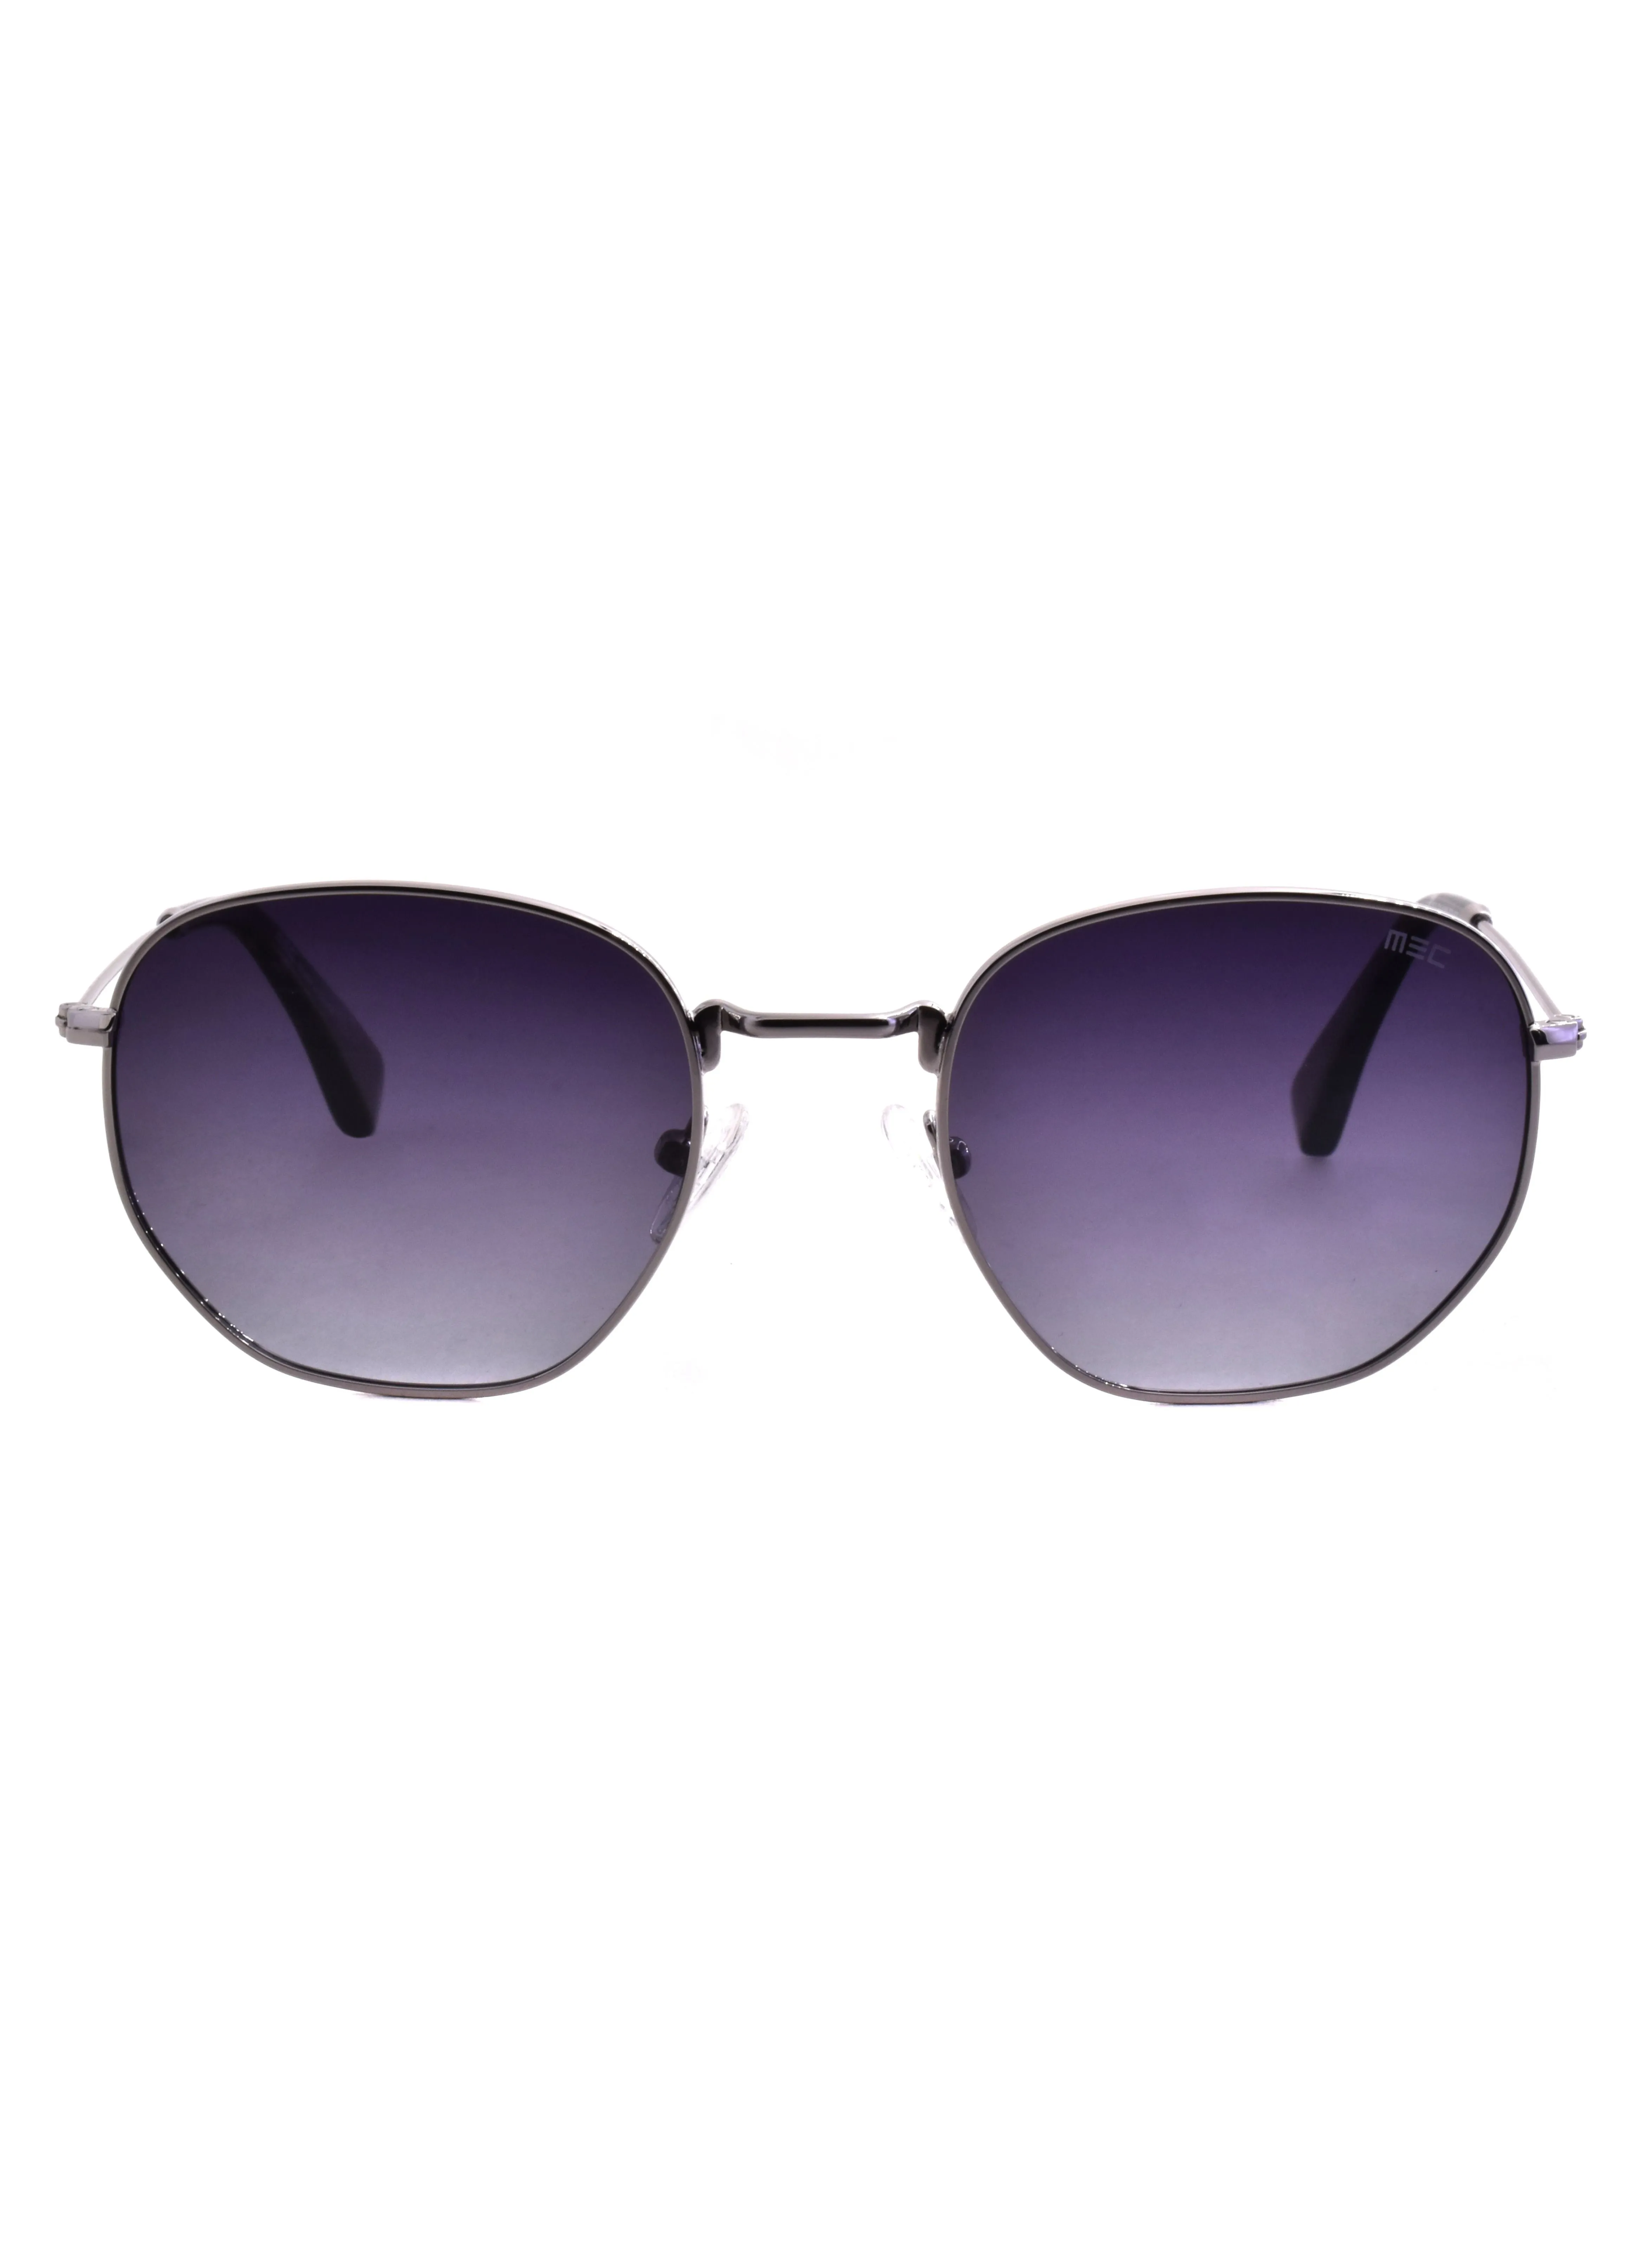 MEC Octagonal/Aviator Shape Sunglasses GLT9003-C2